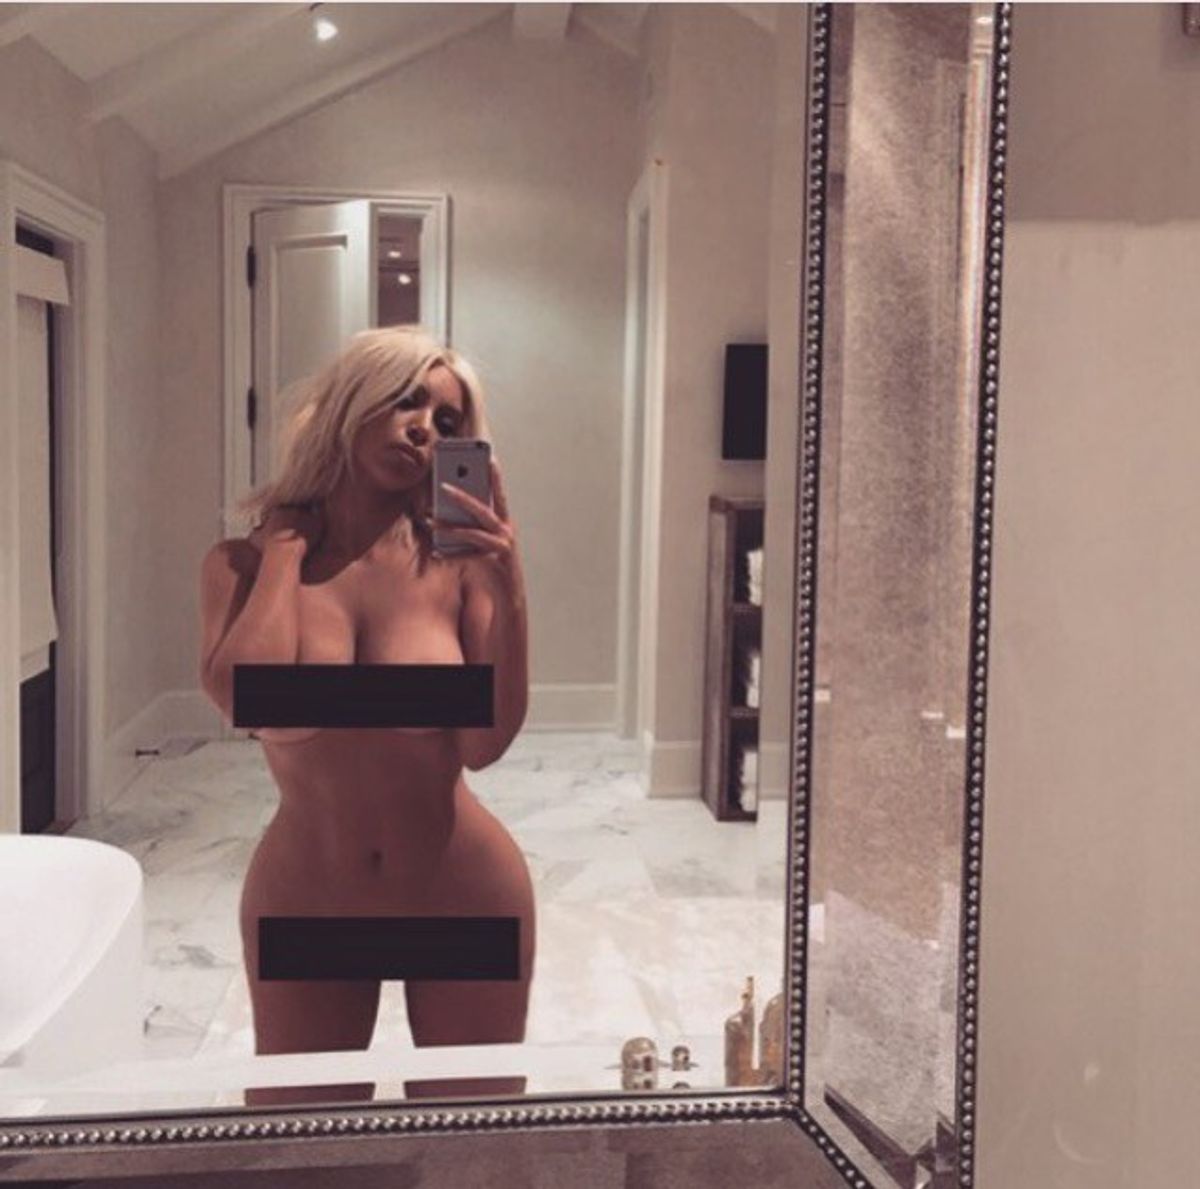 Why You Should Stop Slut-Shaming Kim Kardashian